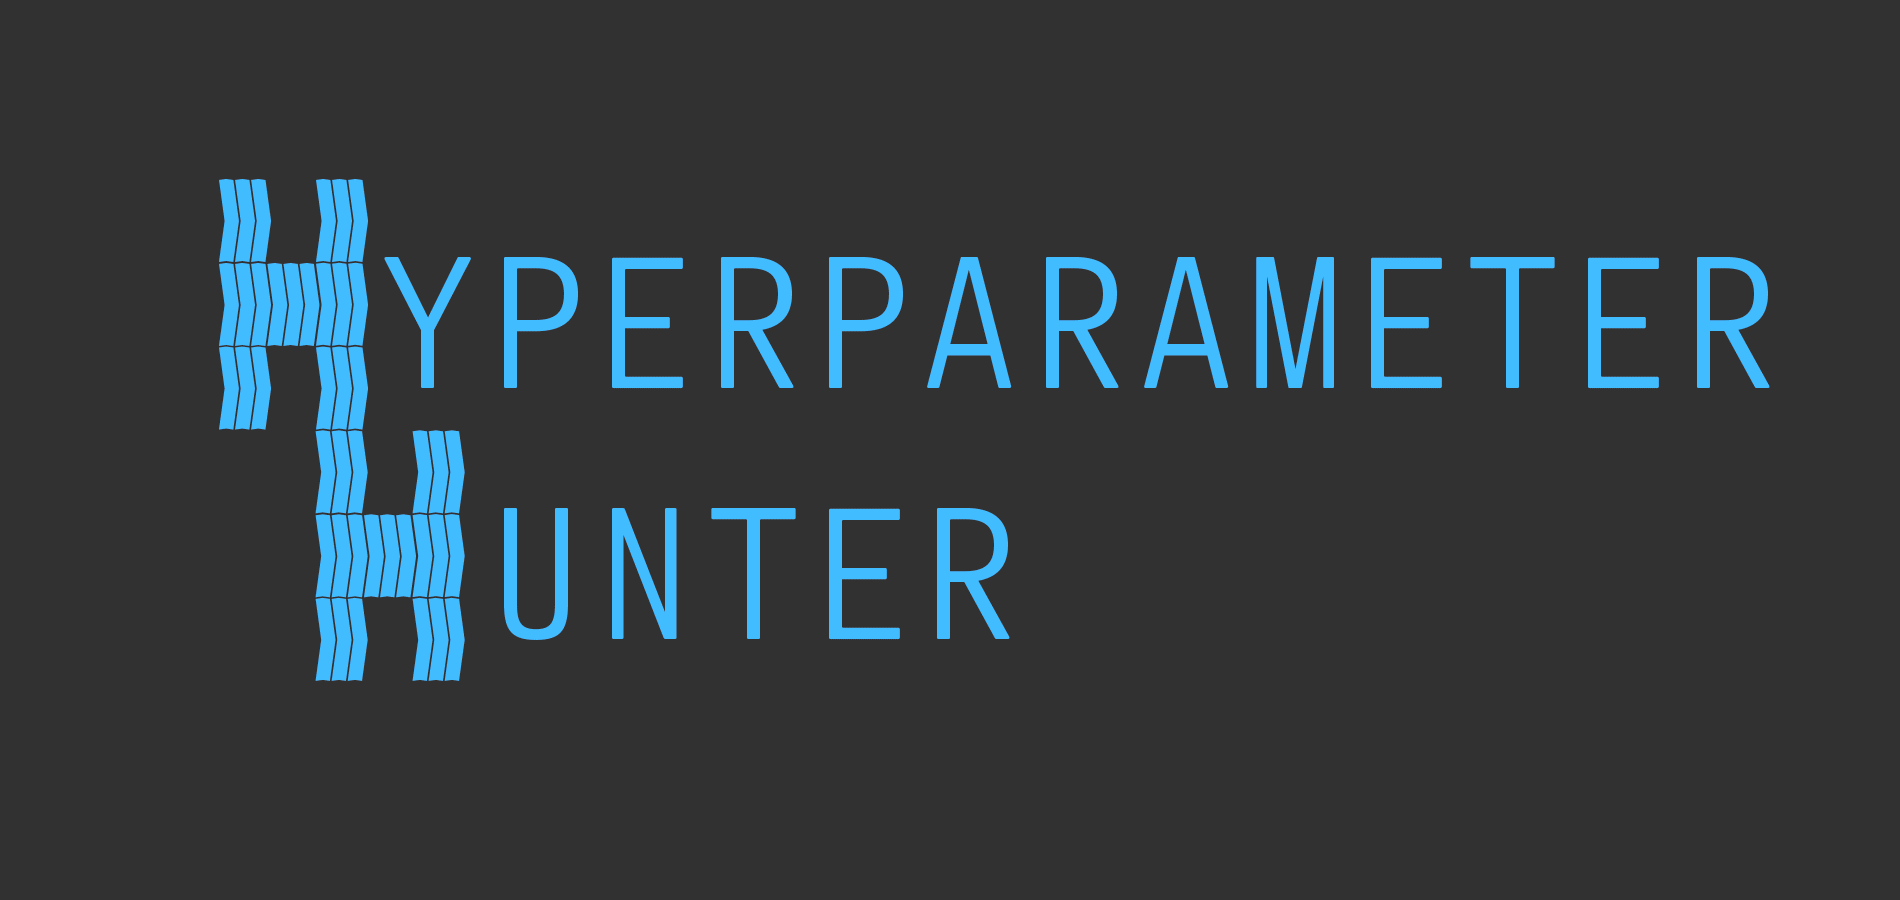 HyperparameterHunter Overview